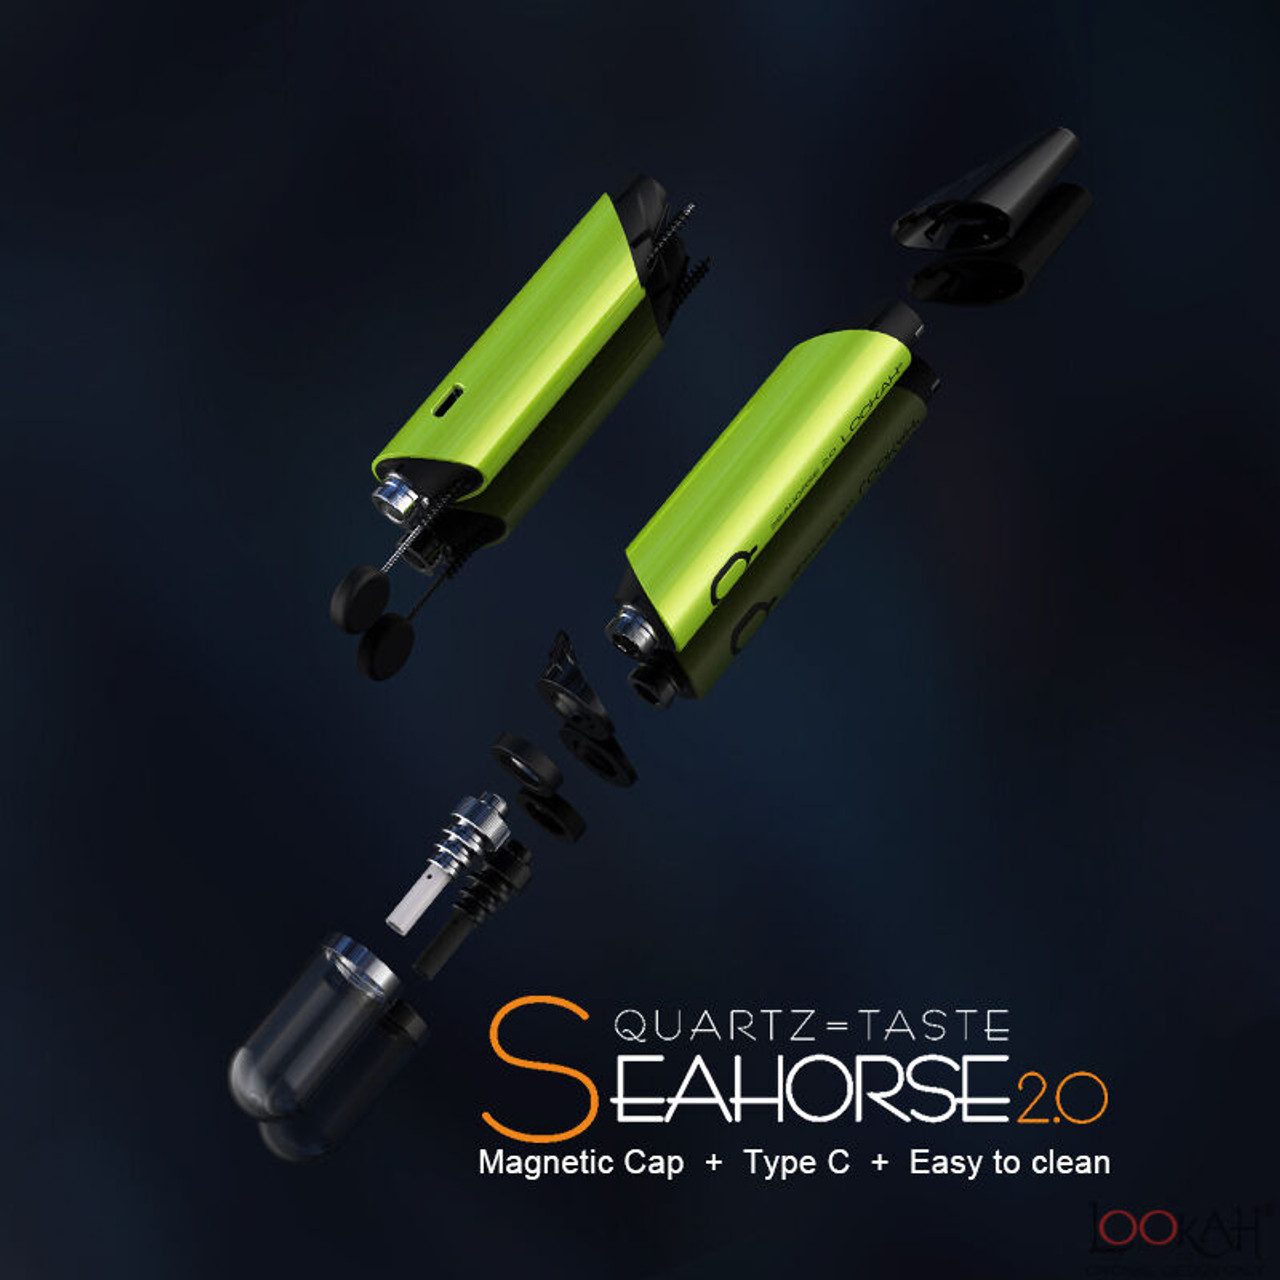 Lookah Seahorse Wax Dab Pen 2.0 Green 